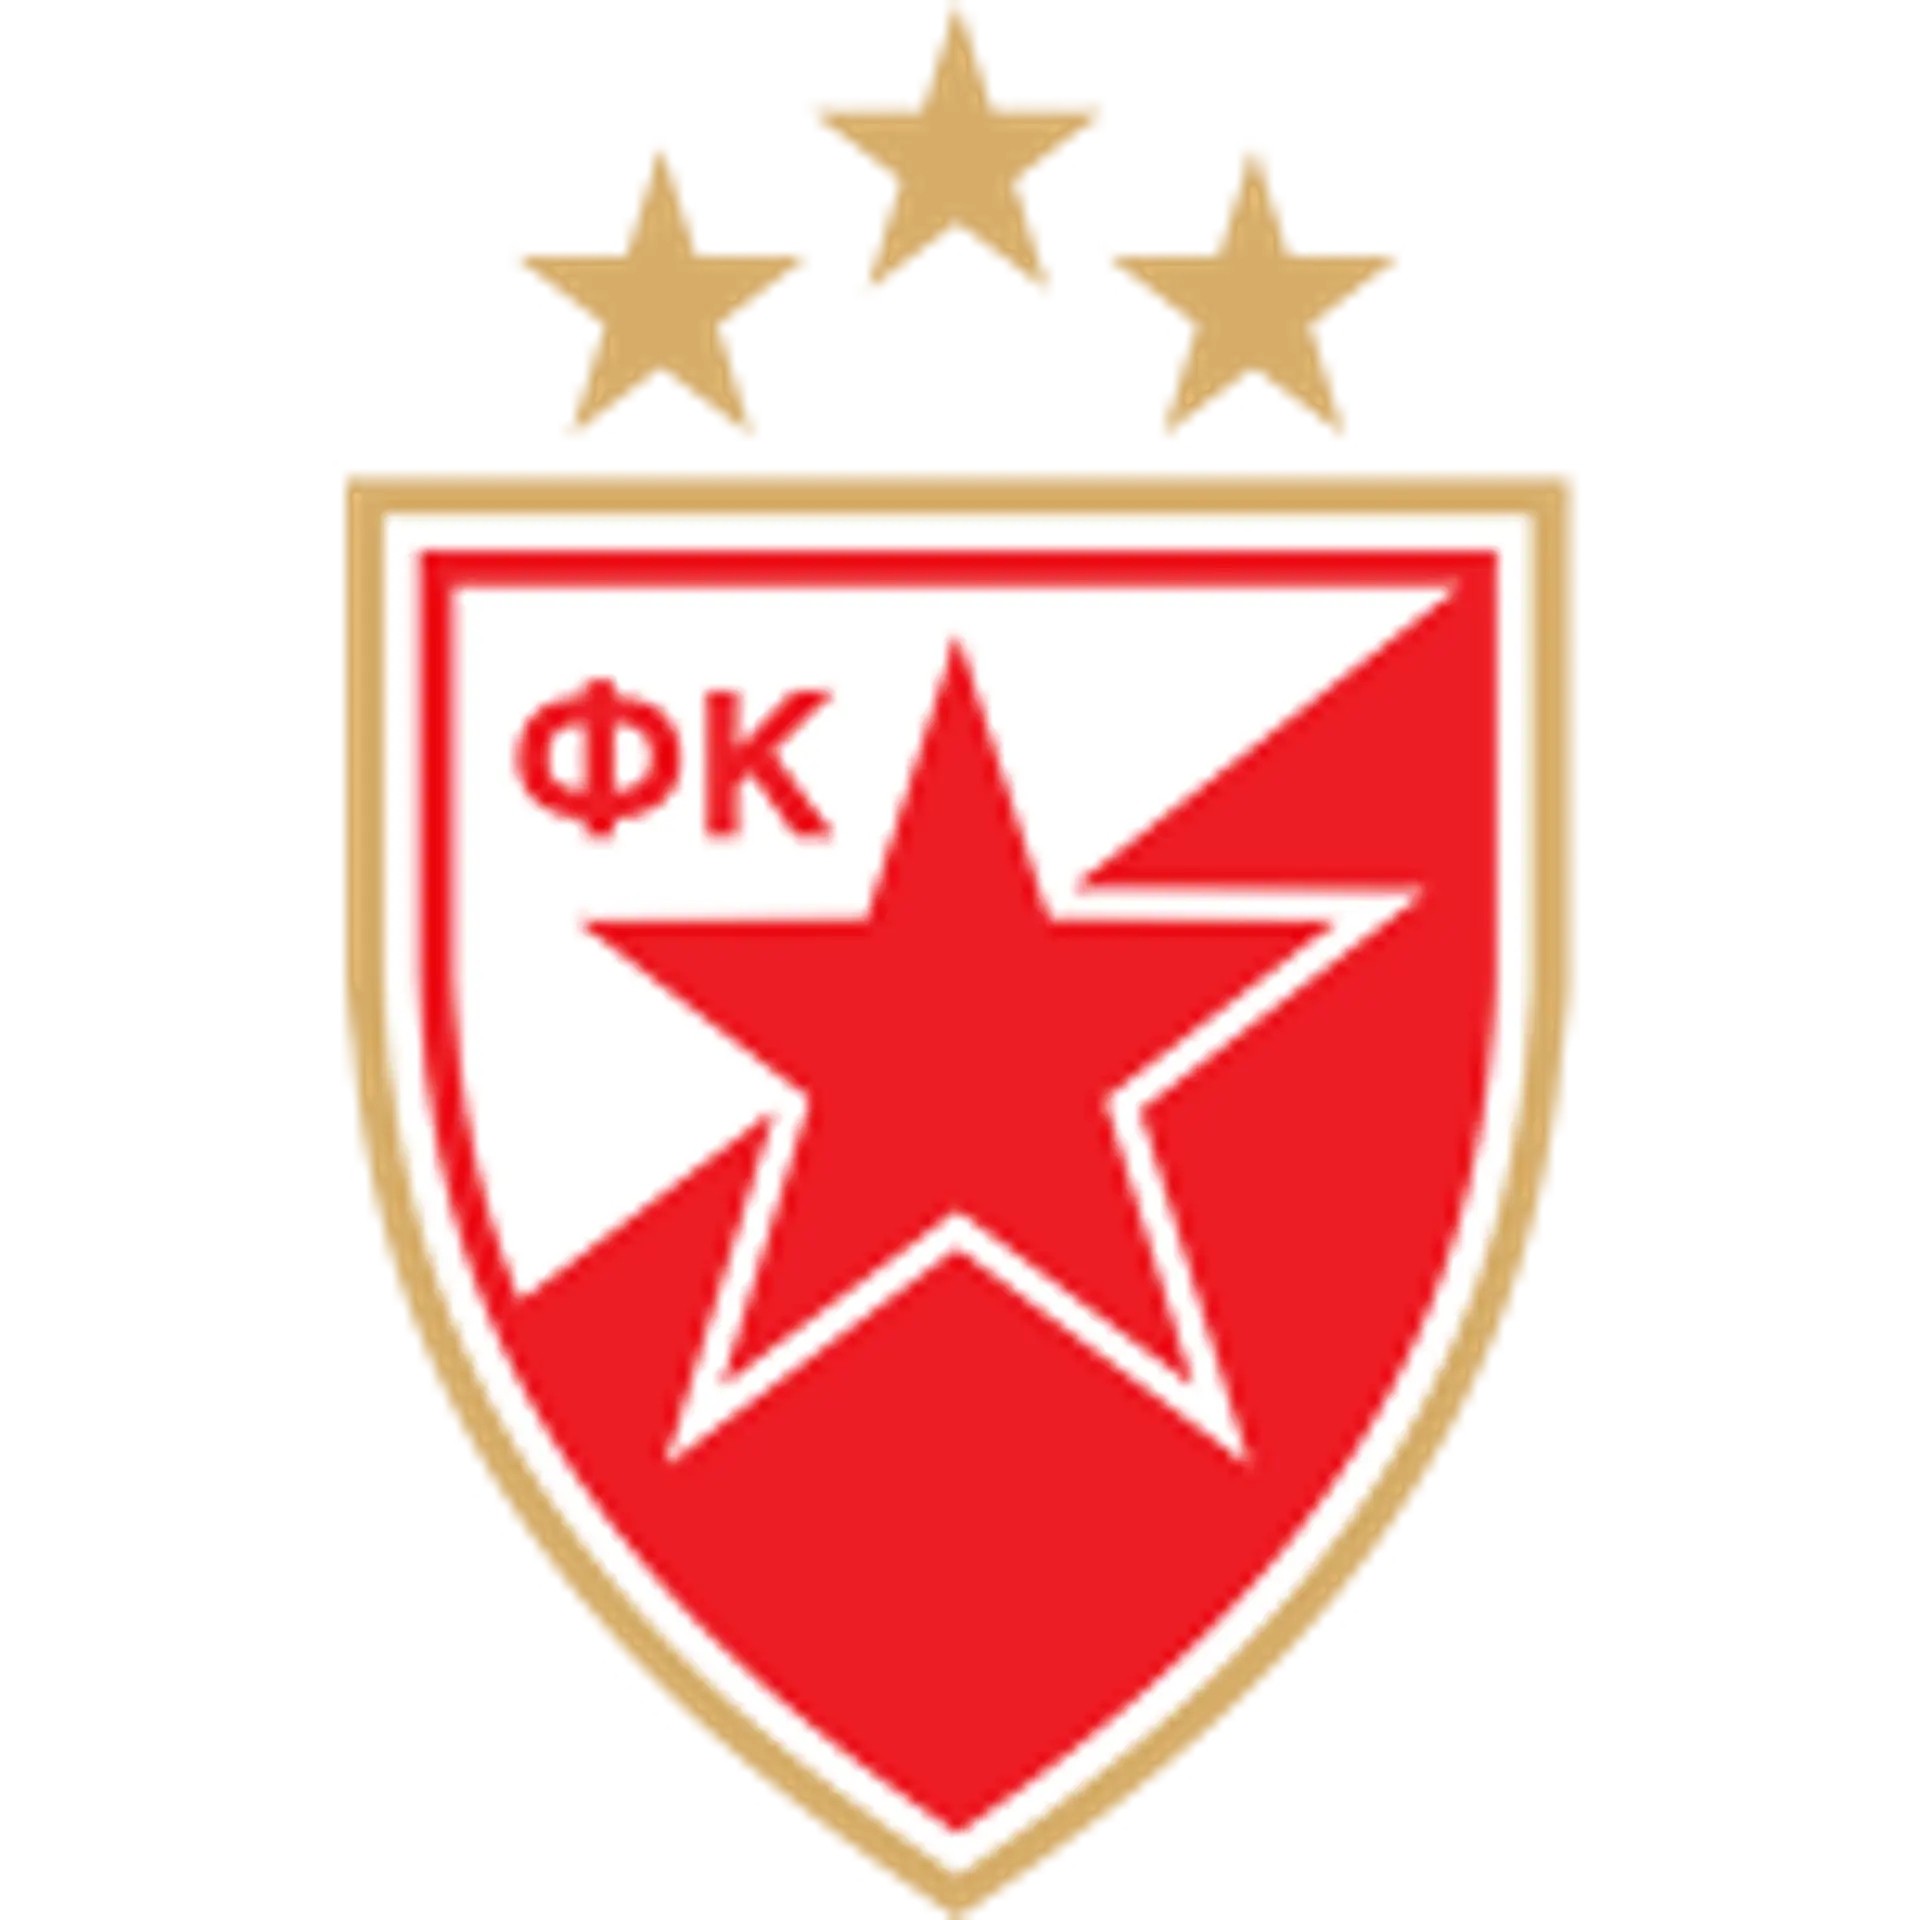 FK Napredak Krusevac vs Red Star Belgrade: Live Score, Stream and H2H  results 3/19/2023. Preview match FK Napredak Krusevac vs Red Star Belgrade,  team, start time.